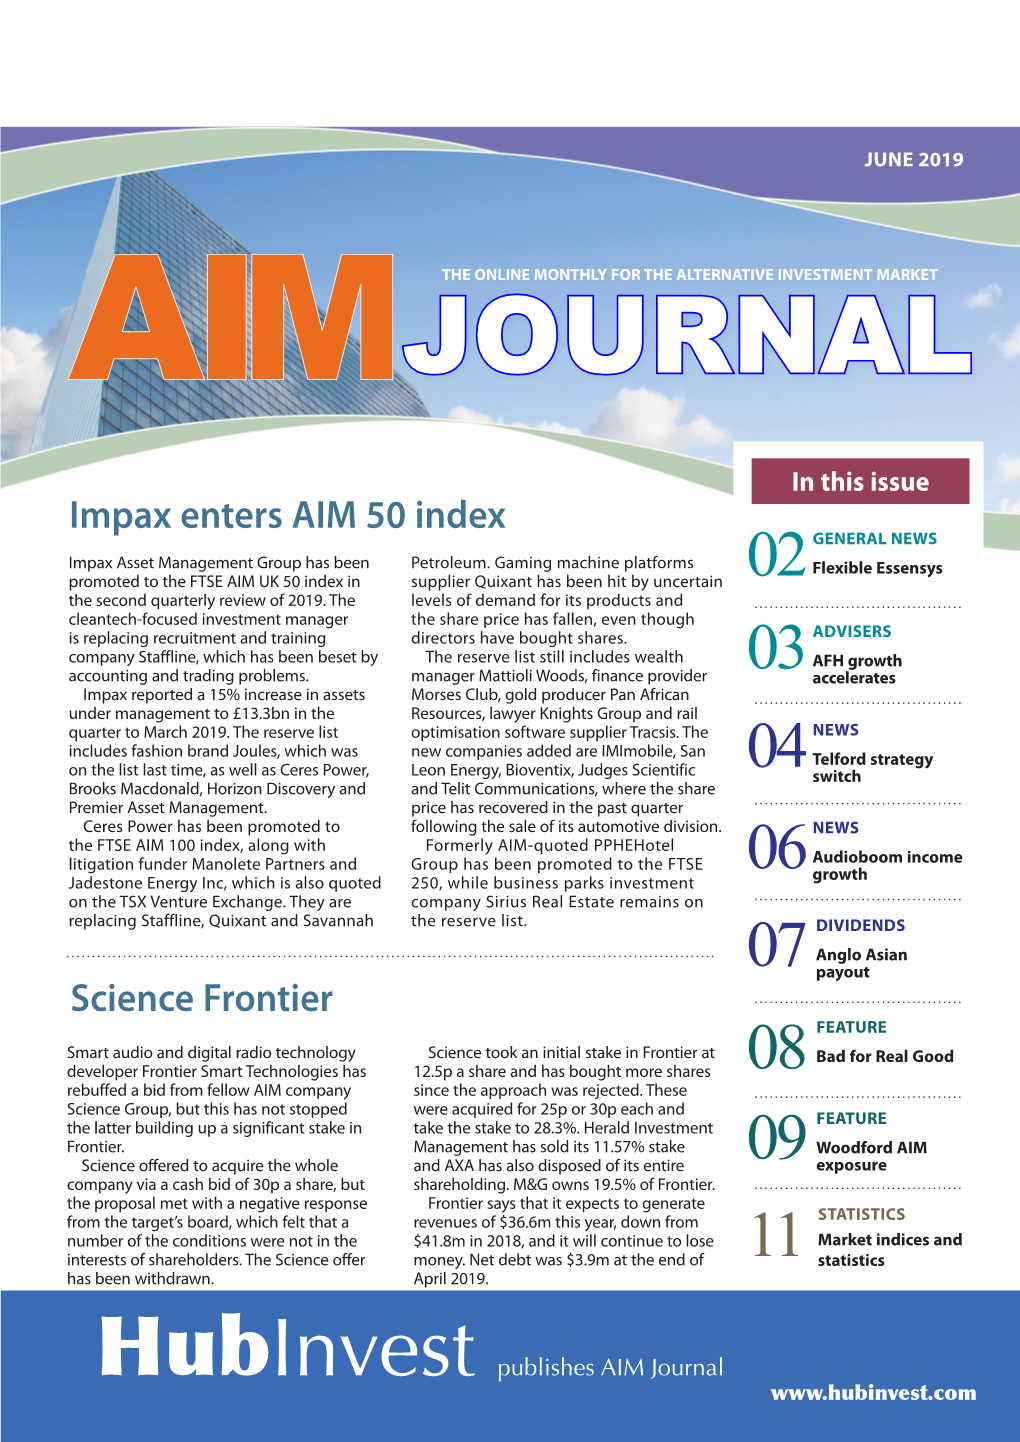 AIM Journal General News Flexible Essensys Centralnic